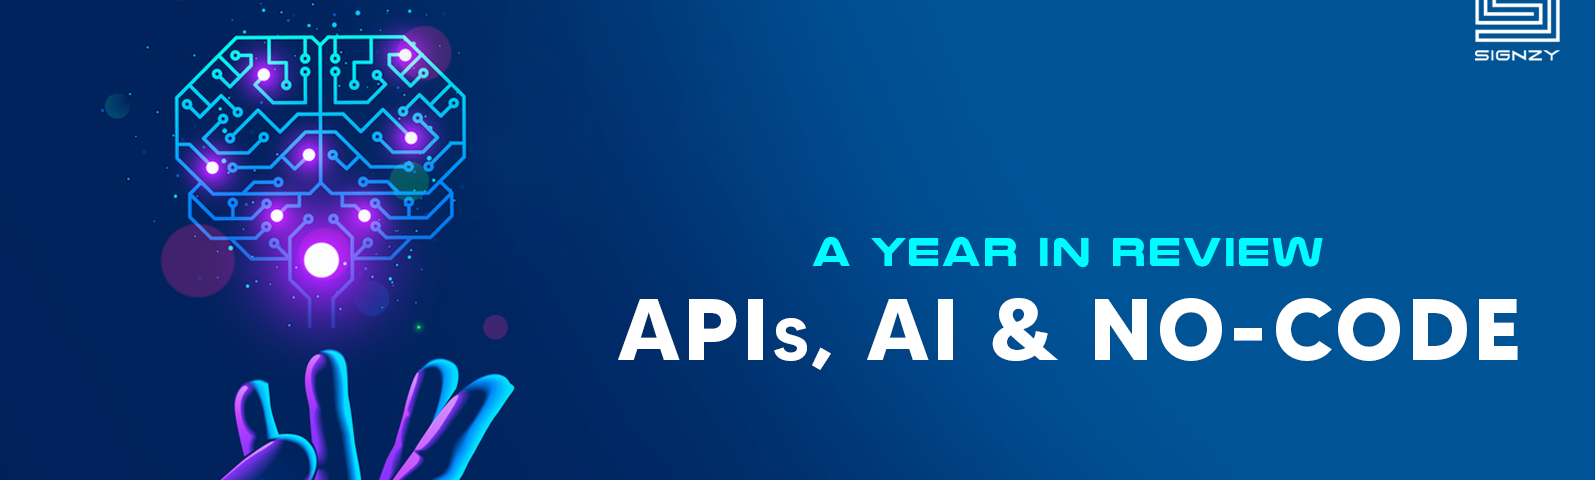 AI | API | Year-End Review